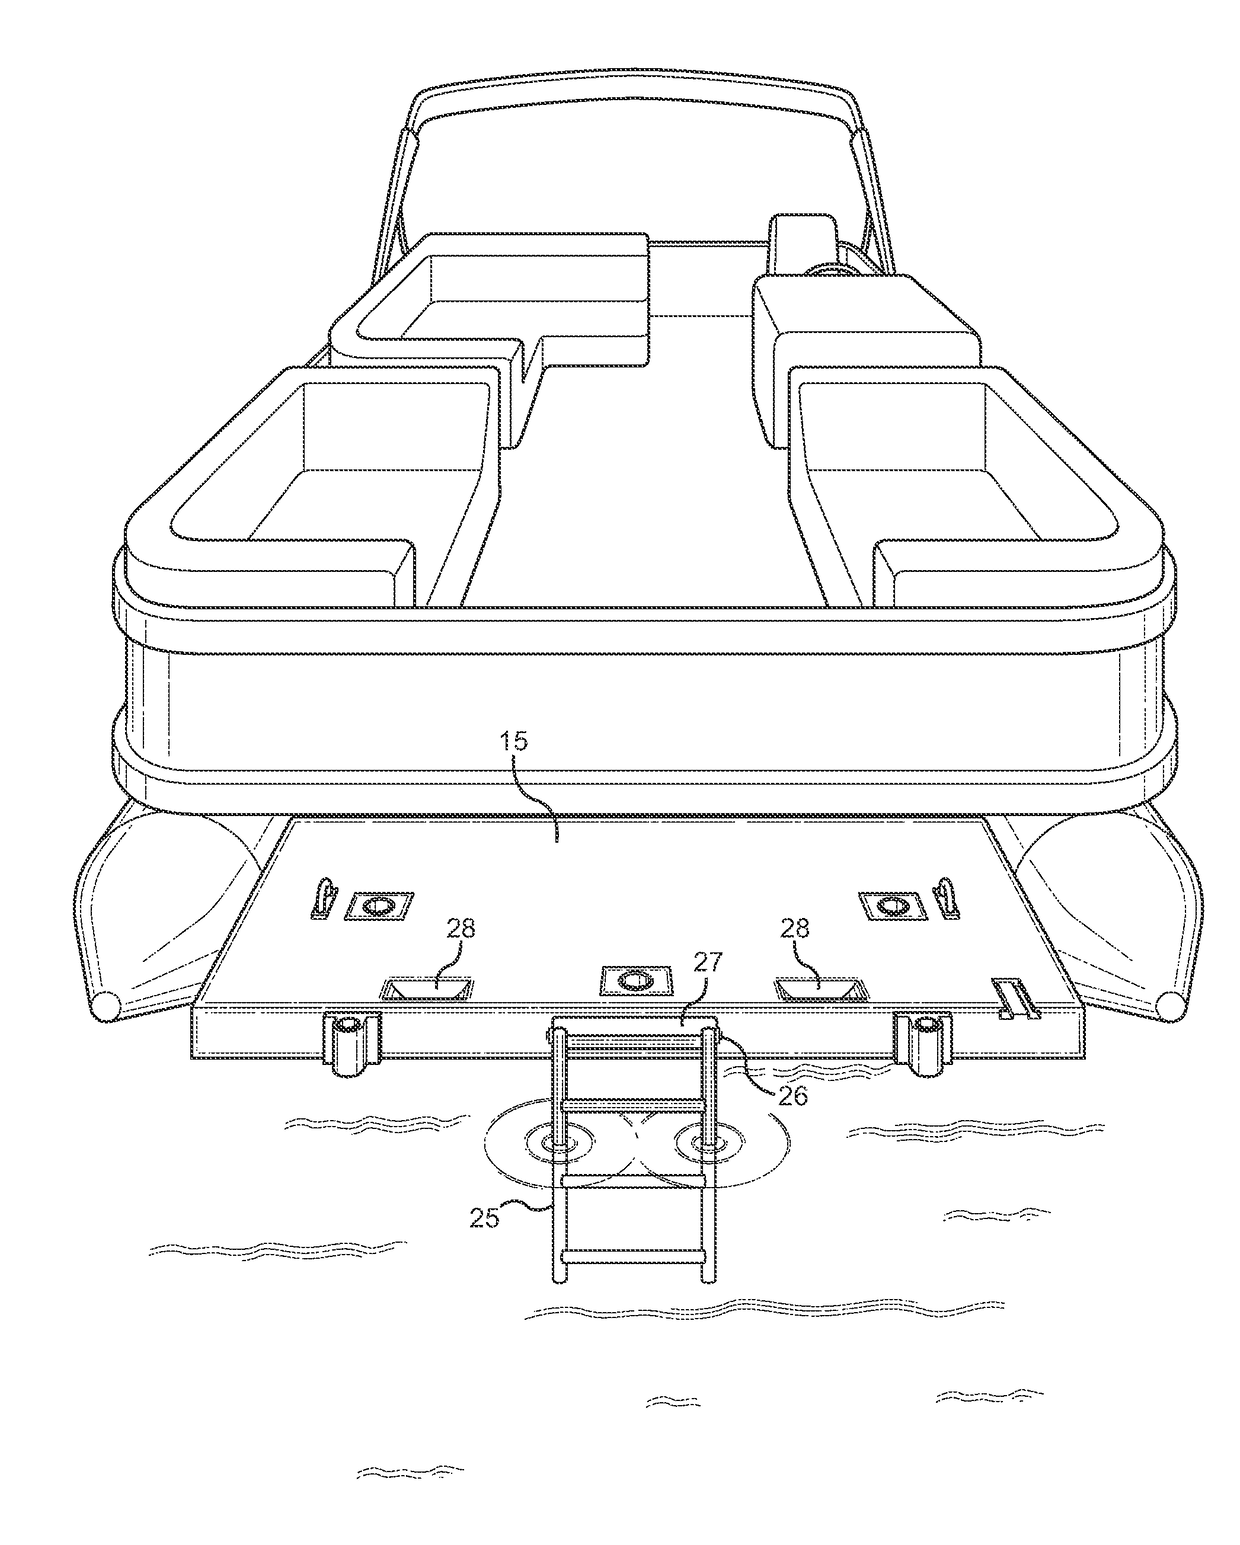 Retractable boat extension